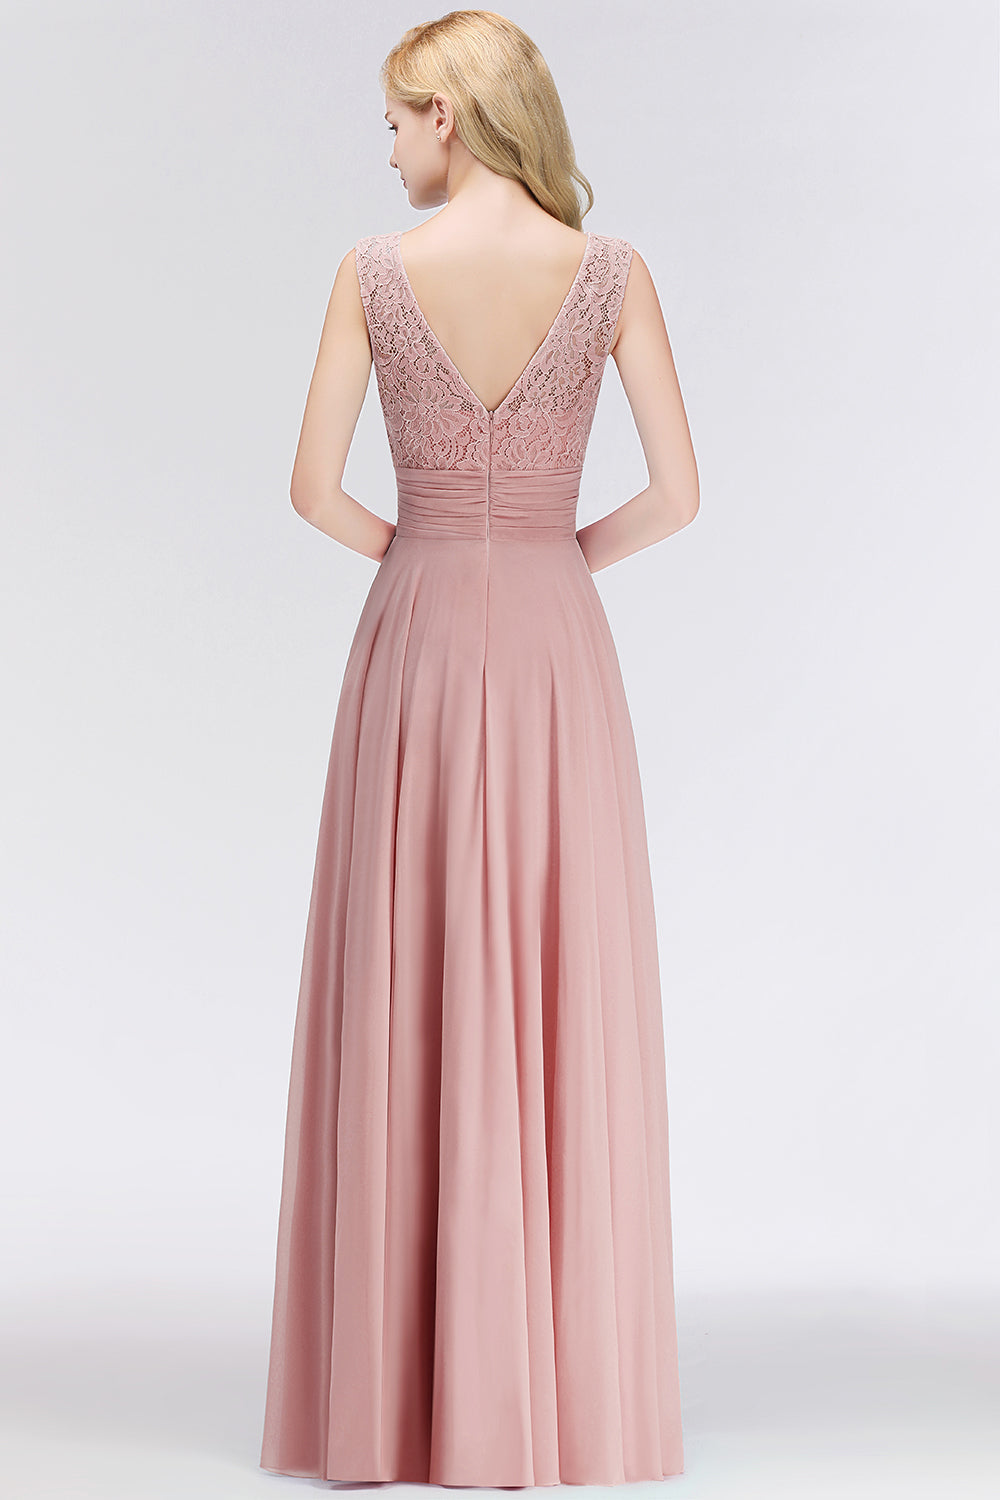 Elegant Lace Jewel Sleeveless Dusty Rose Bridesmaid Dress Online-27dress